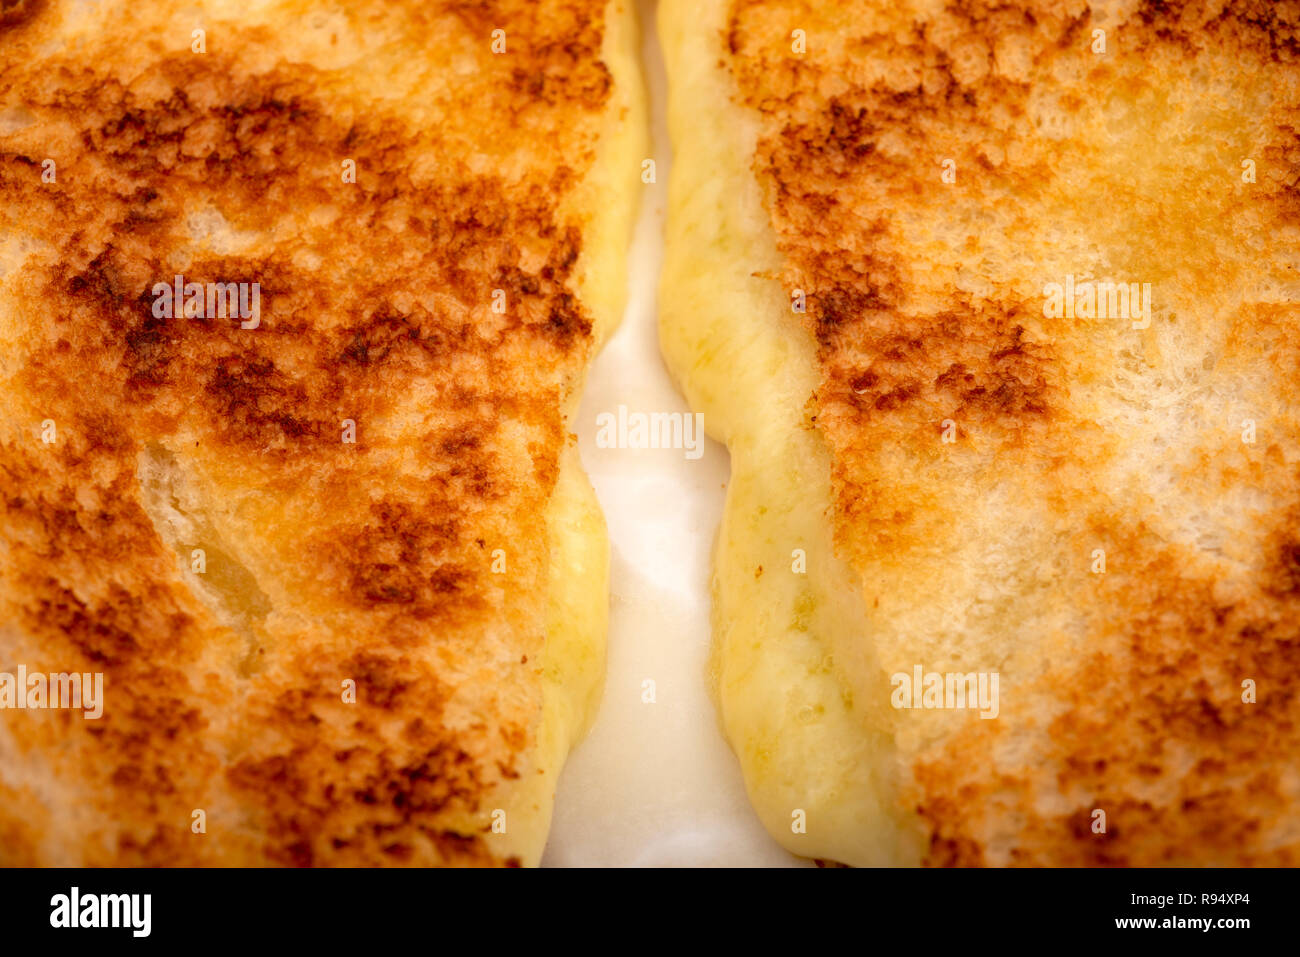 Fried cheese sandwich Stock Photo